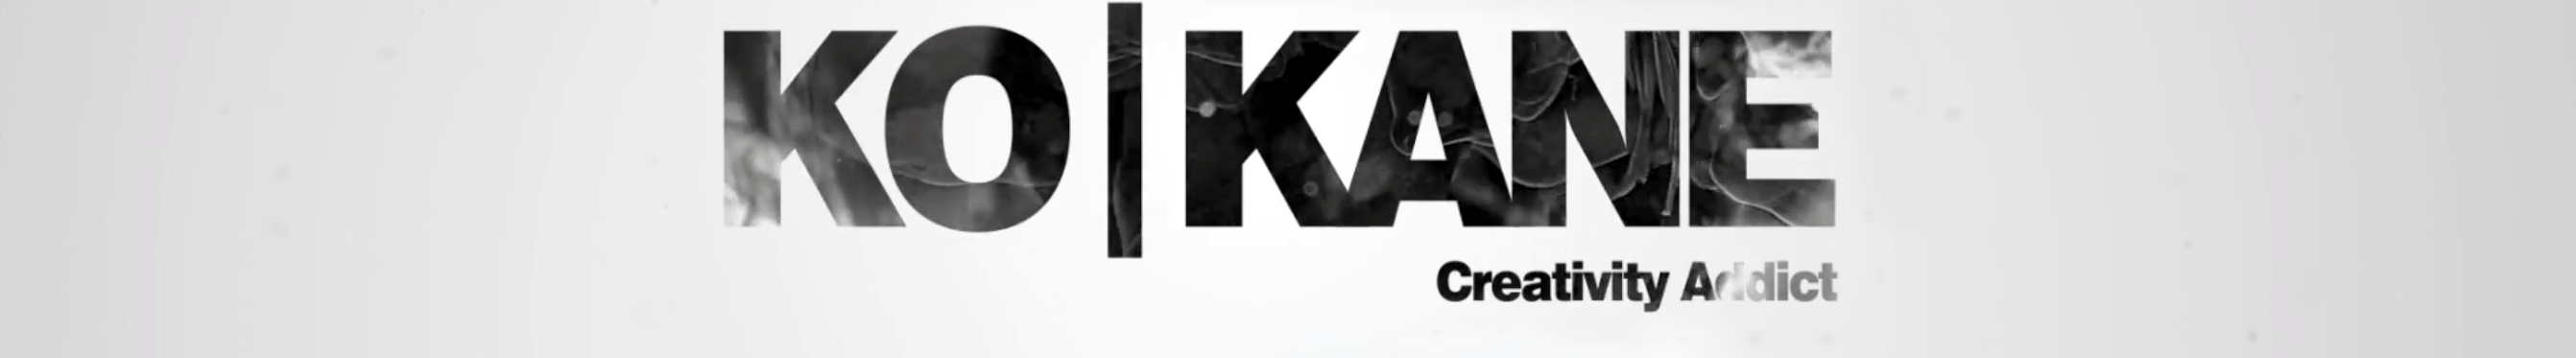 Banner profilu uživatele Ko-Kane LLC